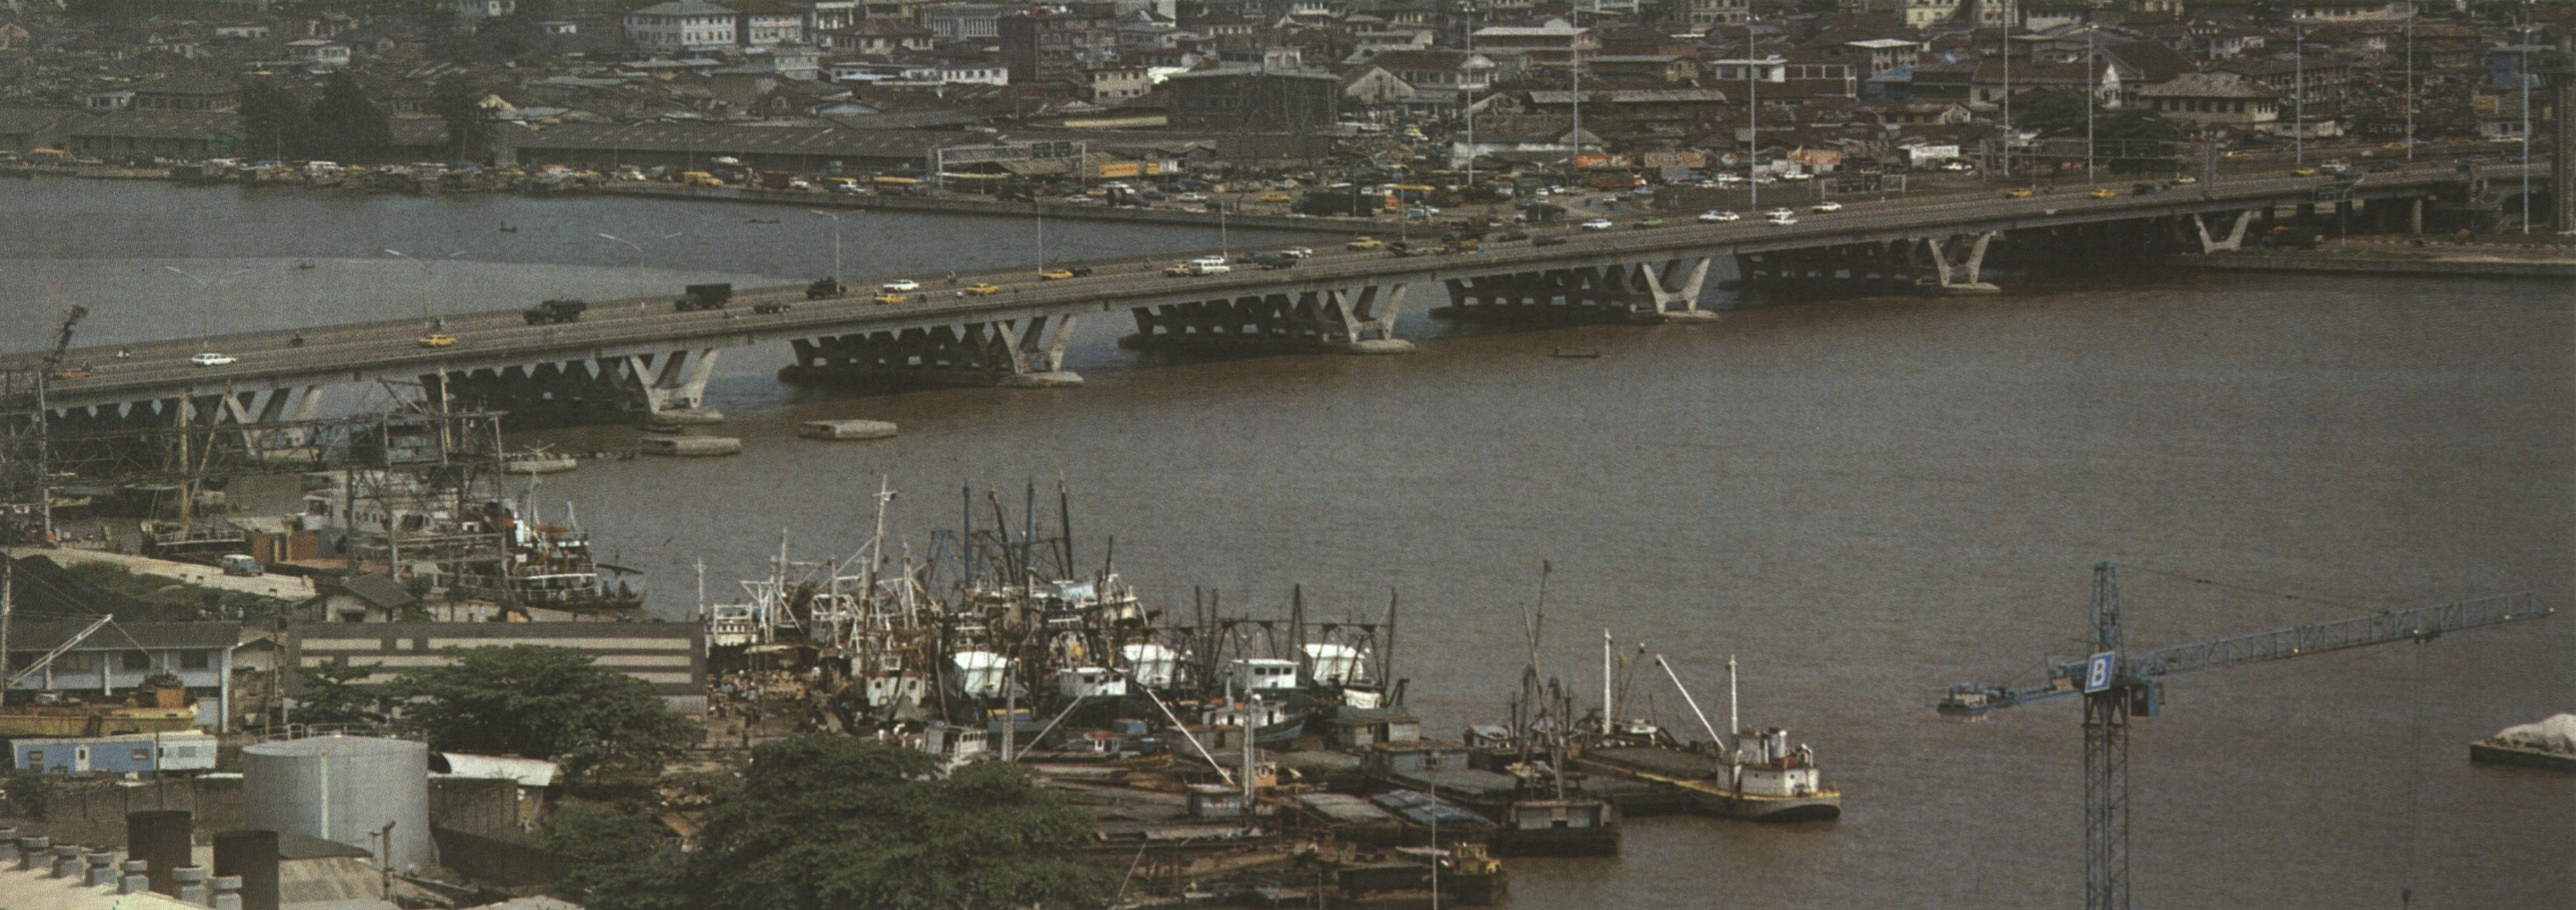 Die Eko-Brücke in Lagos (Nigeria) wurde 1975 fertiggestellt.